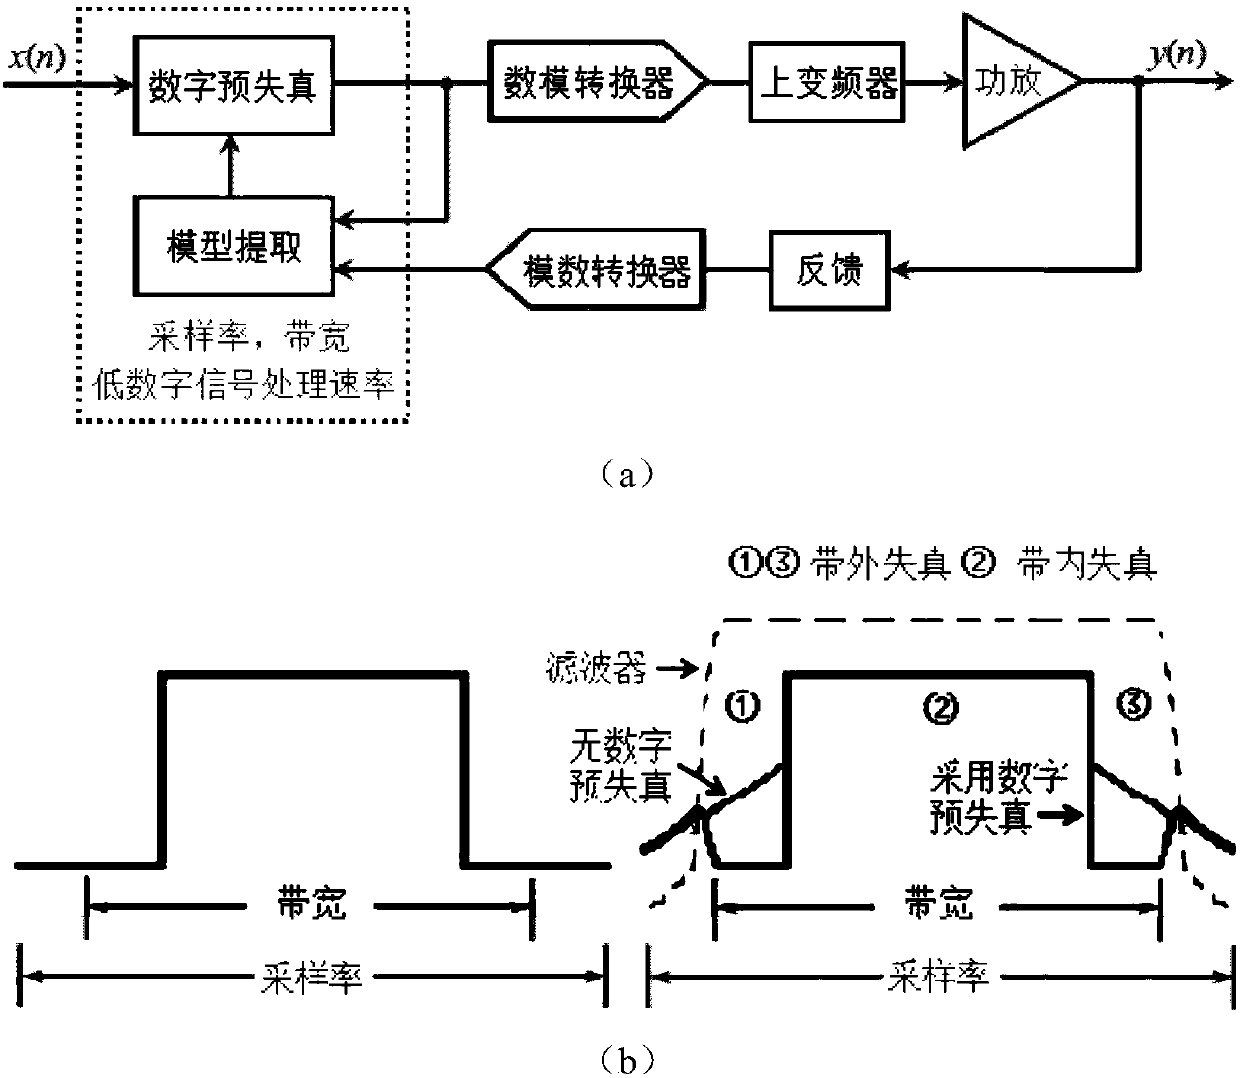 Digital predistortion system and method of millimeter wave wideband power amplifier